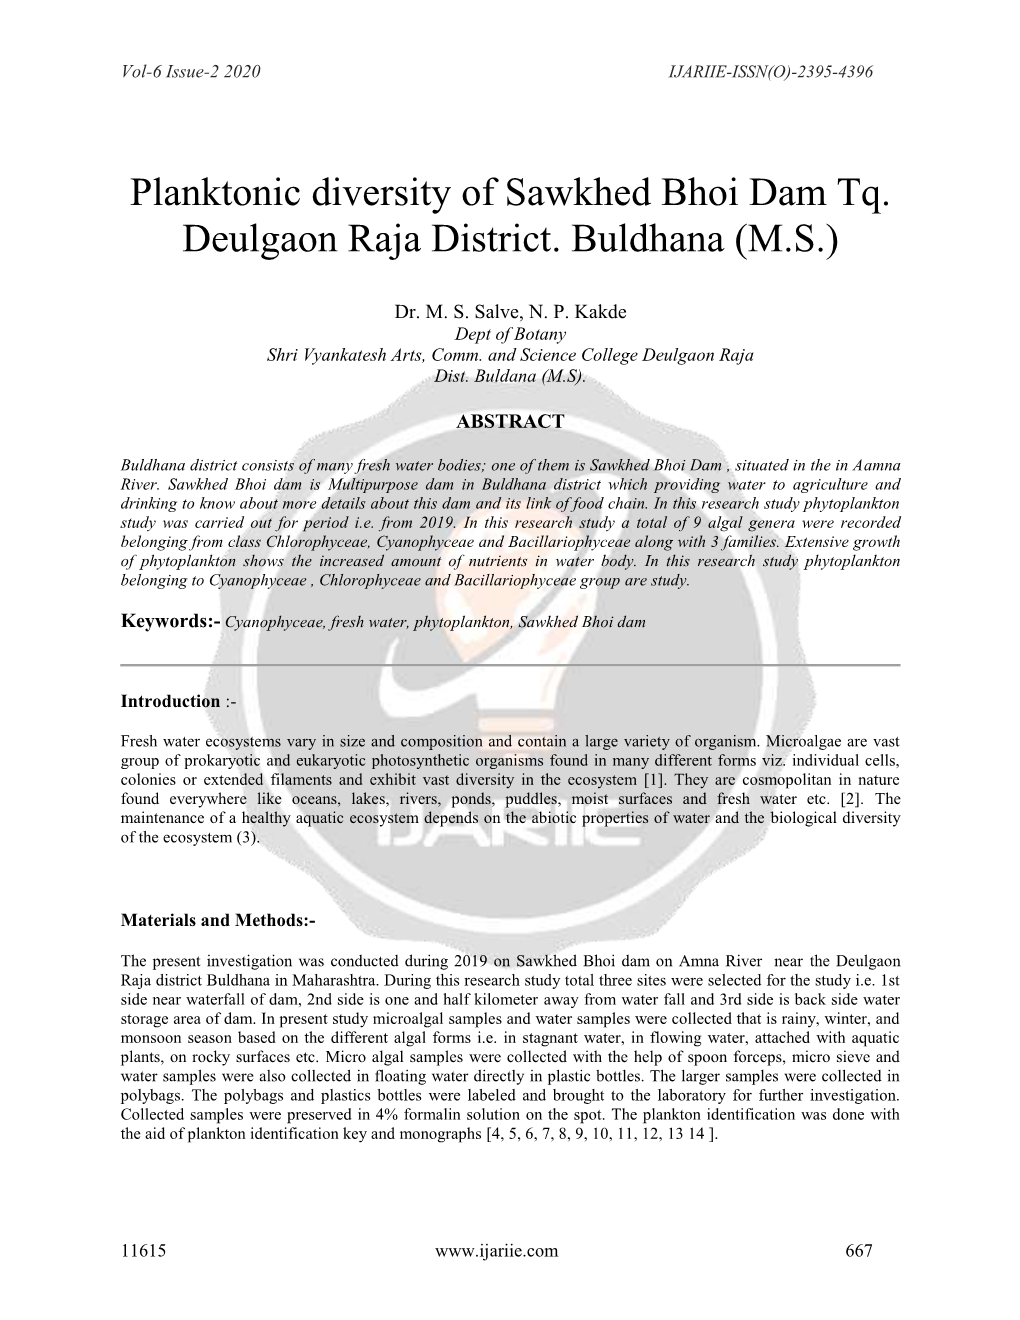 Planktonic Diversity of Sawkhed Bhoi Dam Tq. Deulgaon Raja District